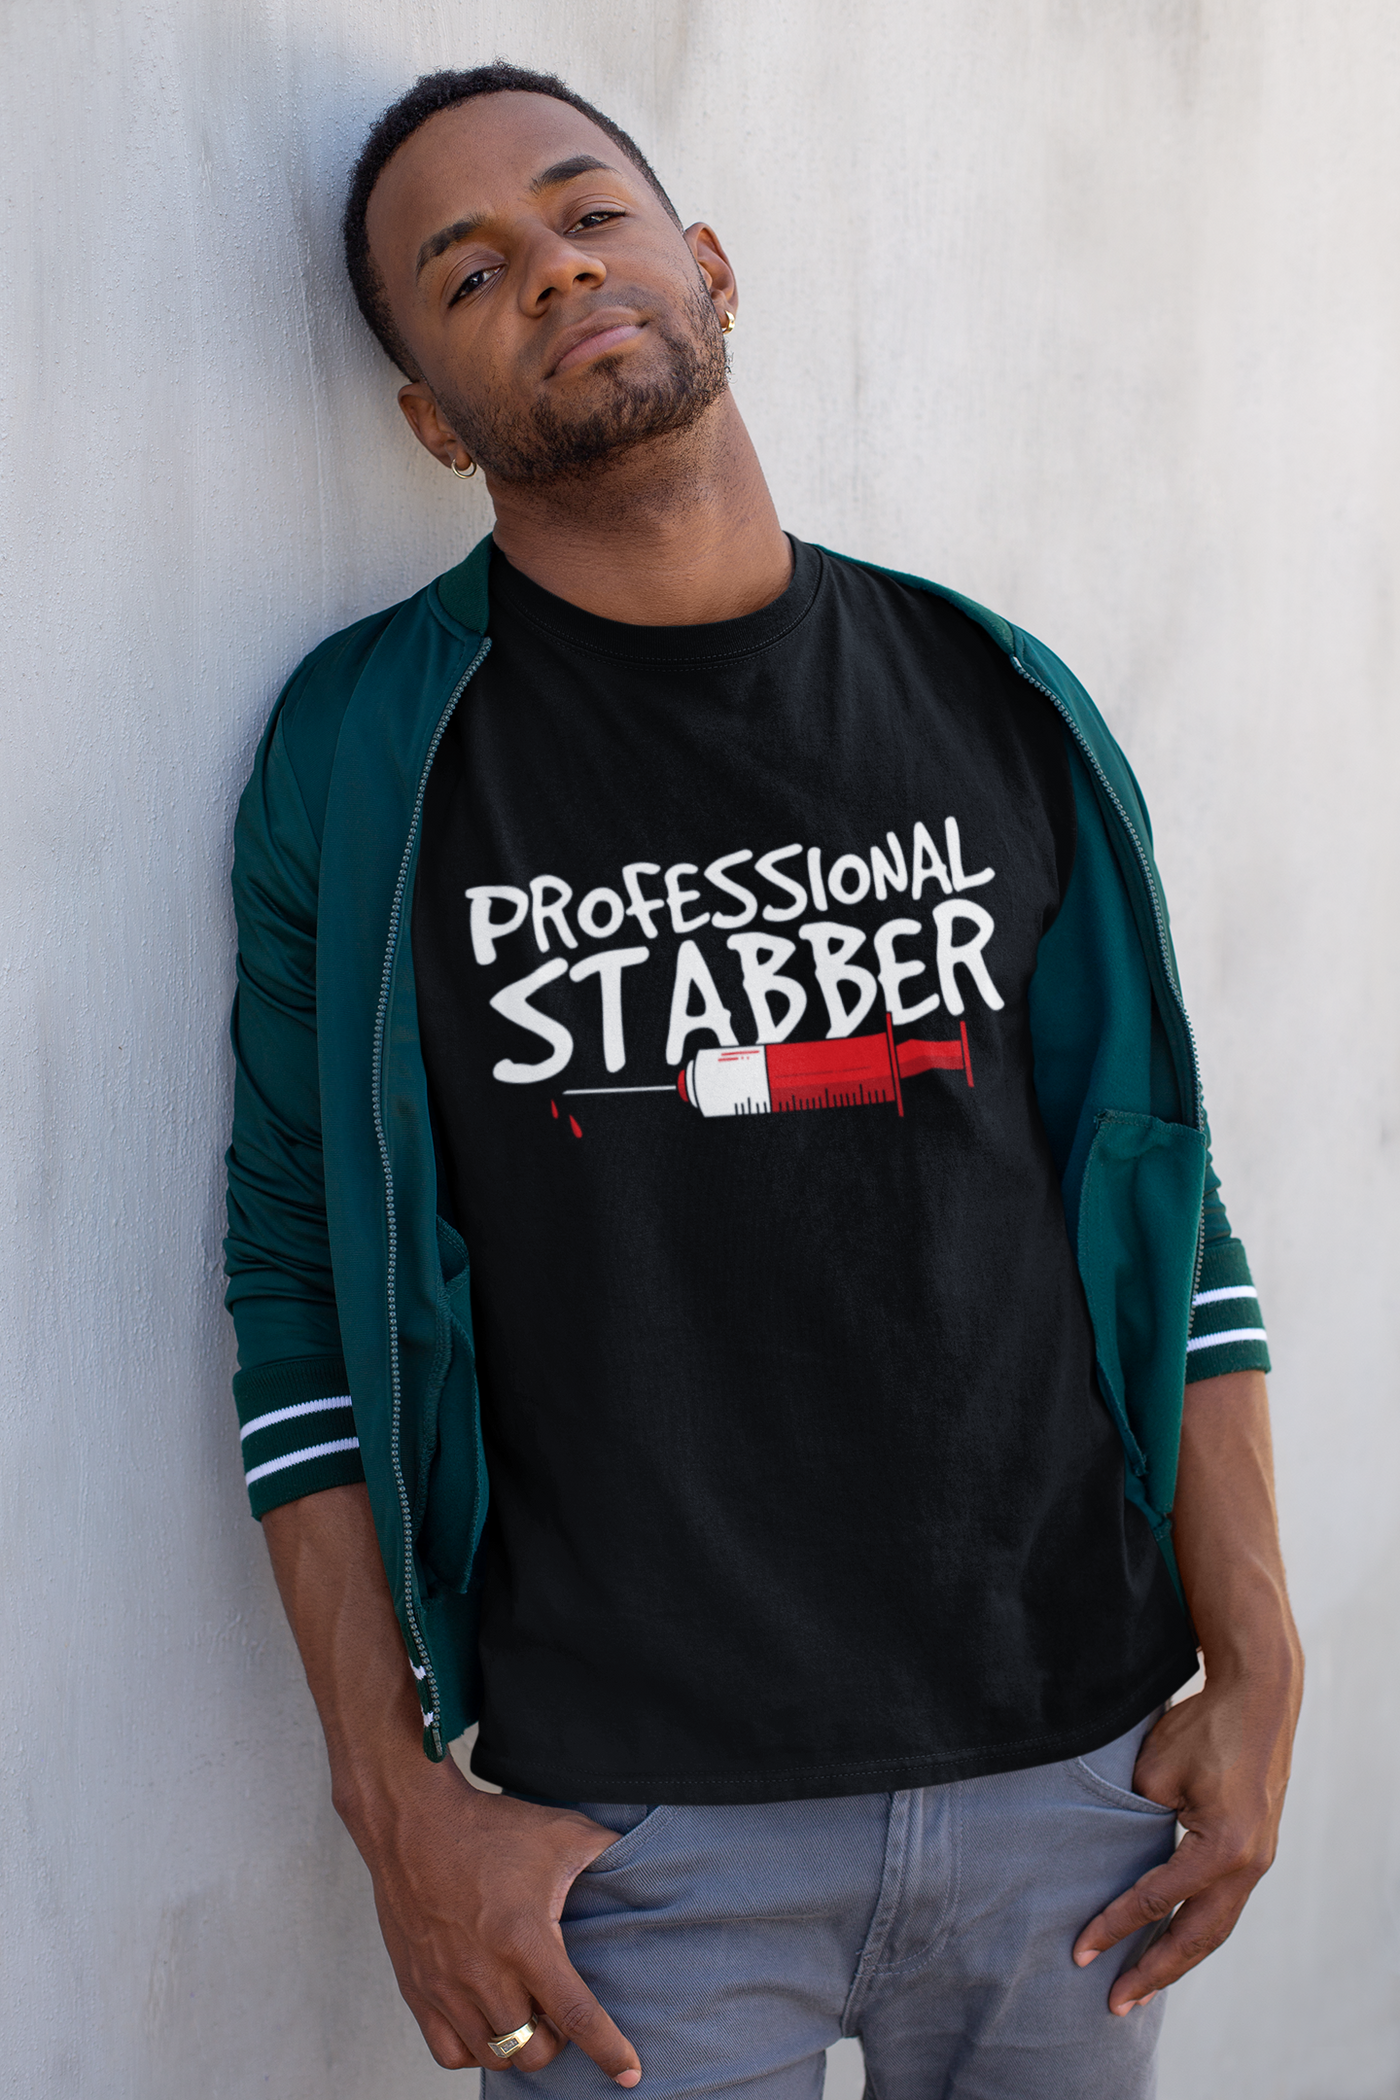 Professional Stabber